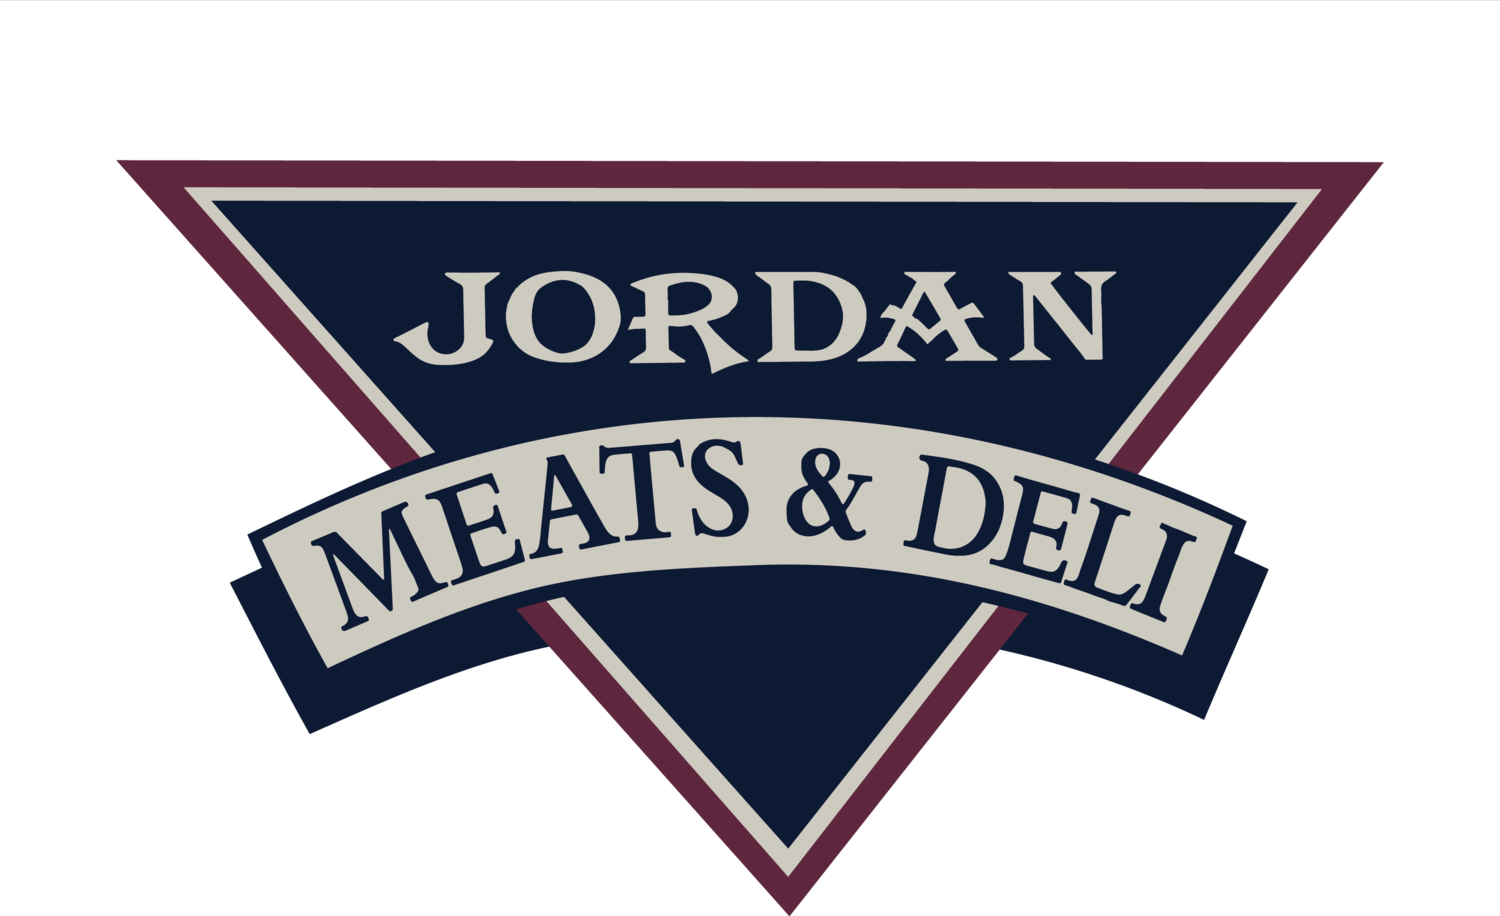 Jordan Meats  Deli